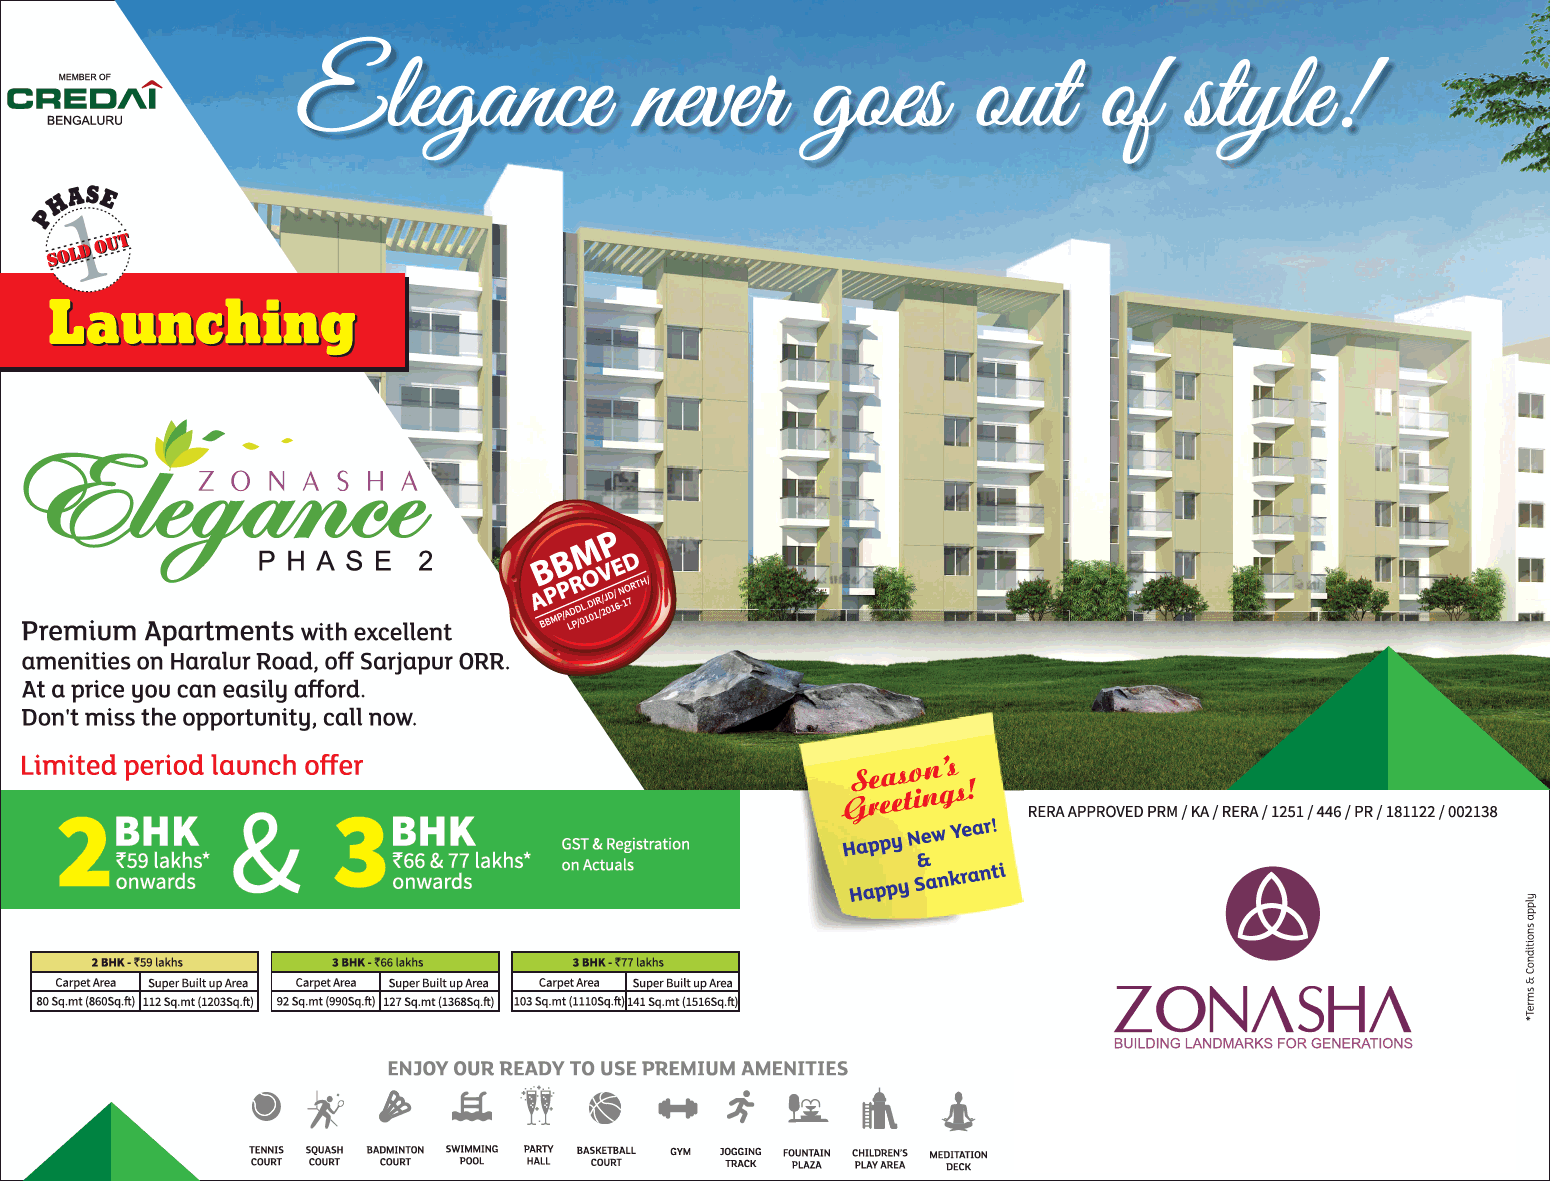 Book premium apartments with excellent amenities at Zonasha Elegance in Bangalore